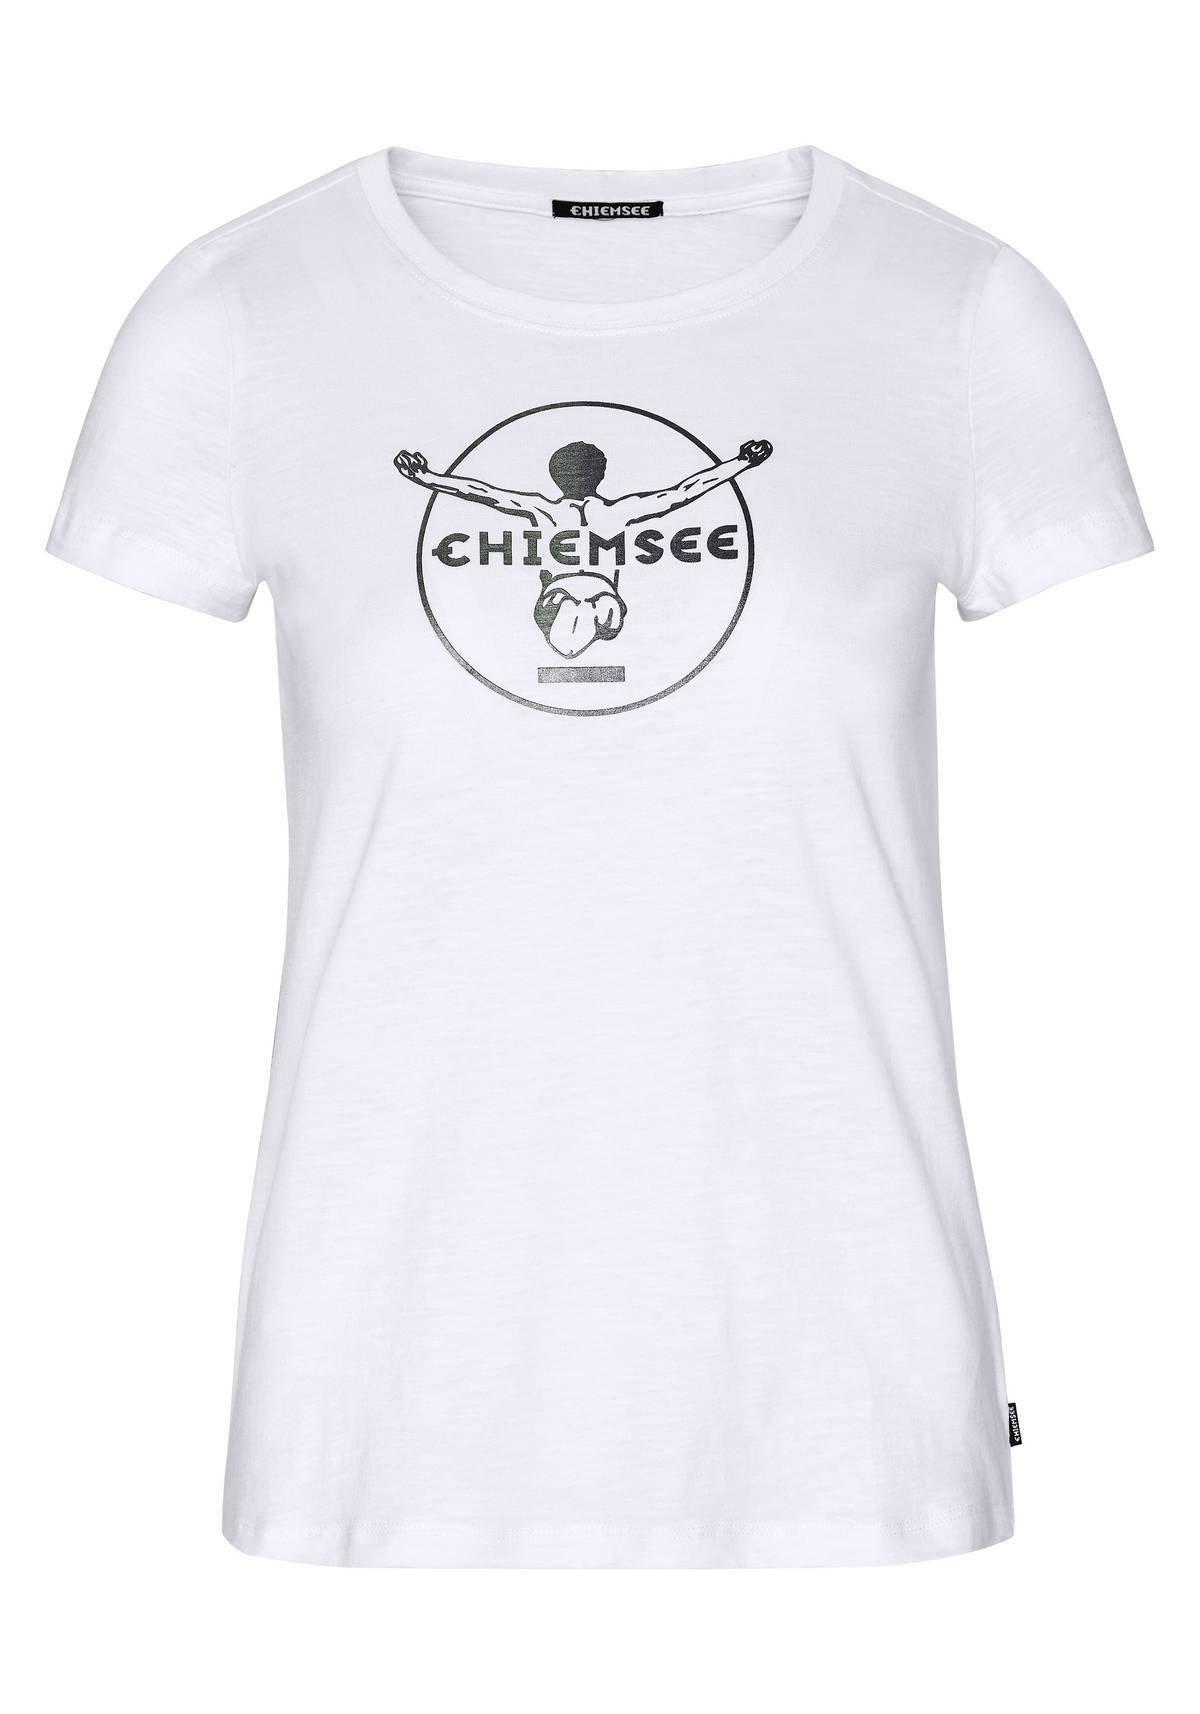 Chiemsee  T-shirt  Confortable à porter-Taormina 